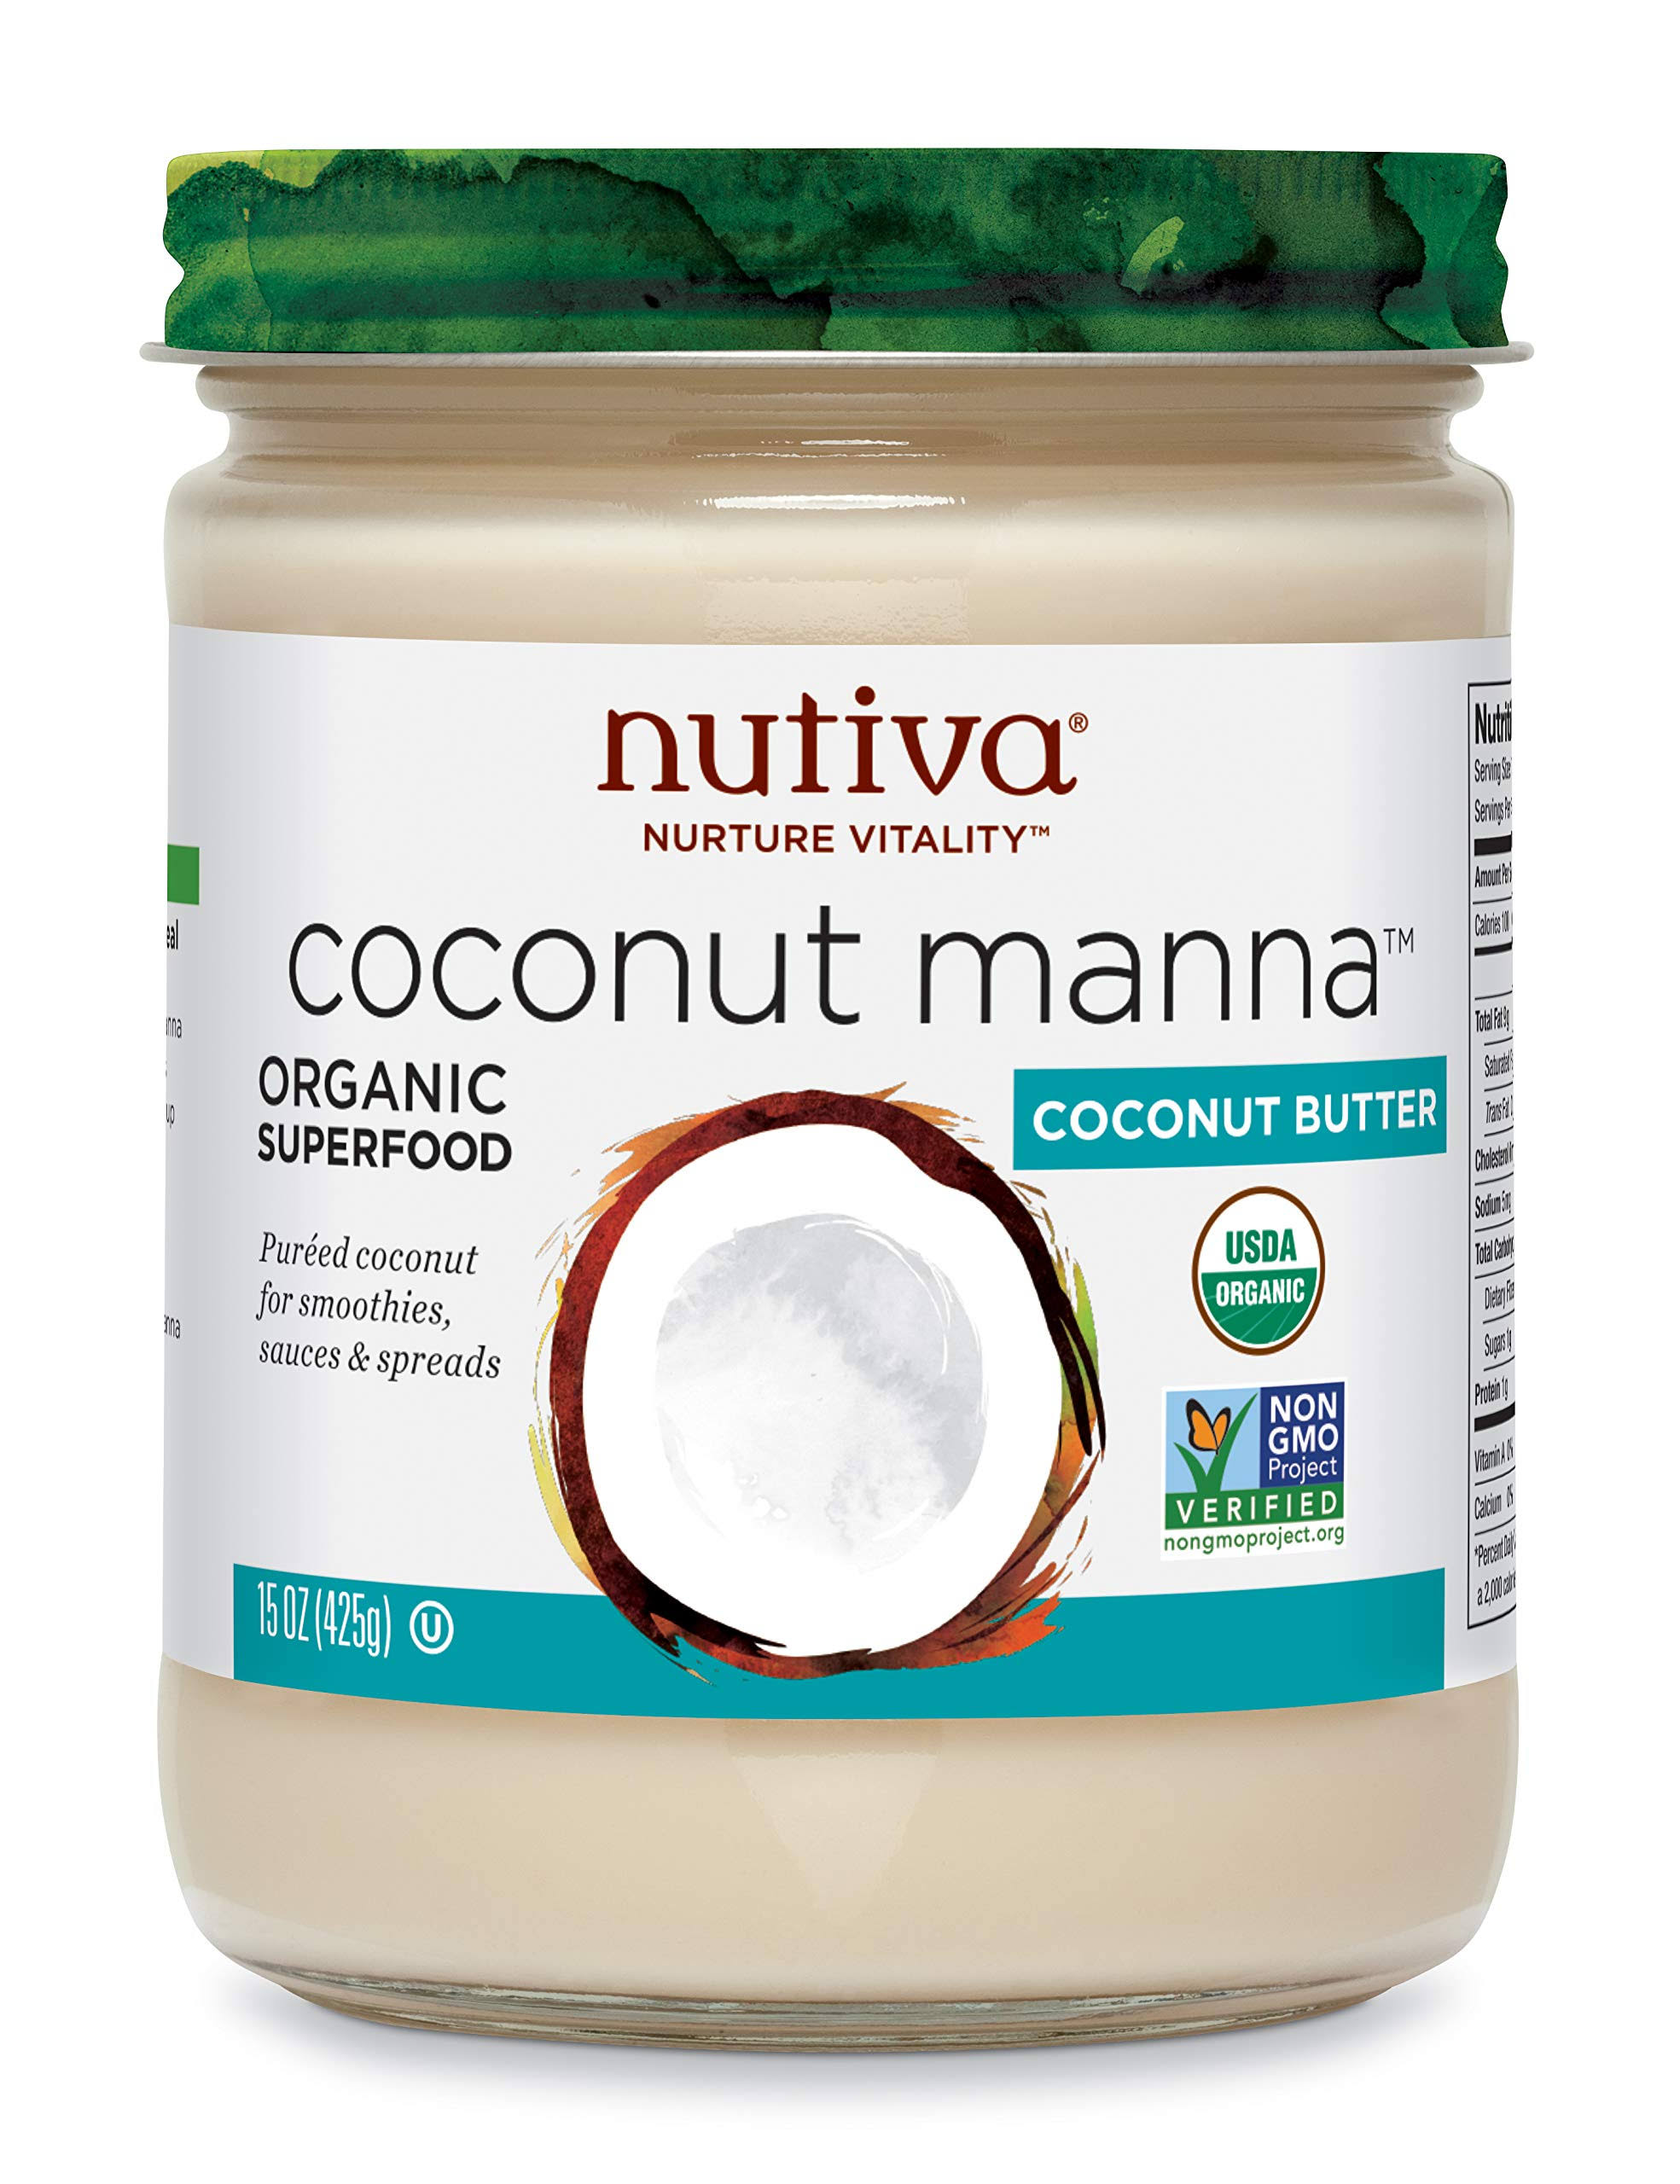 Nutiva Coconut Manna Coconut Butter